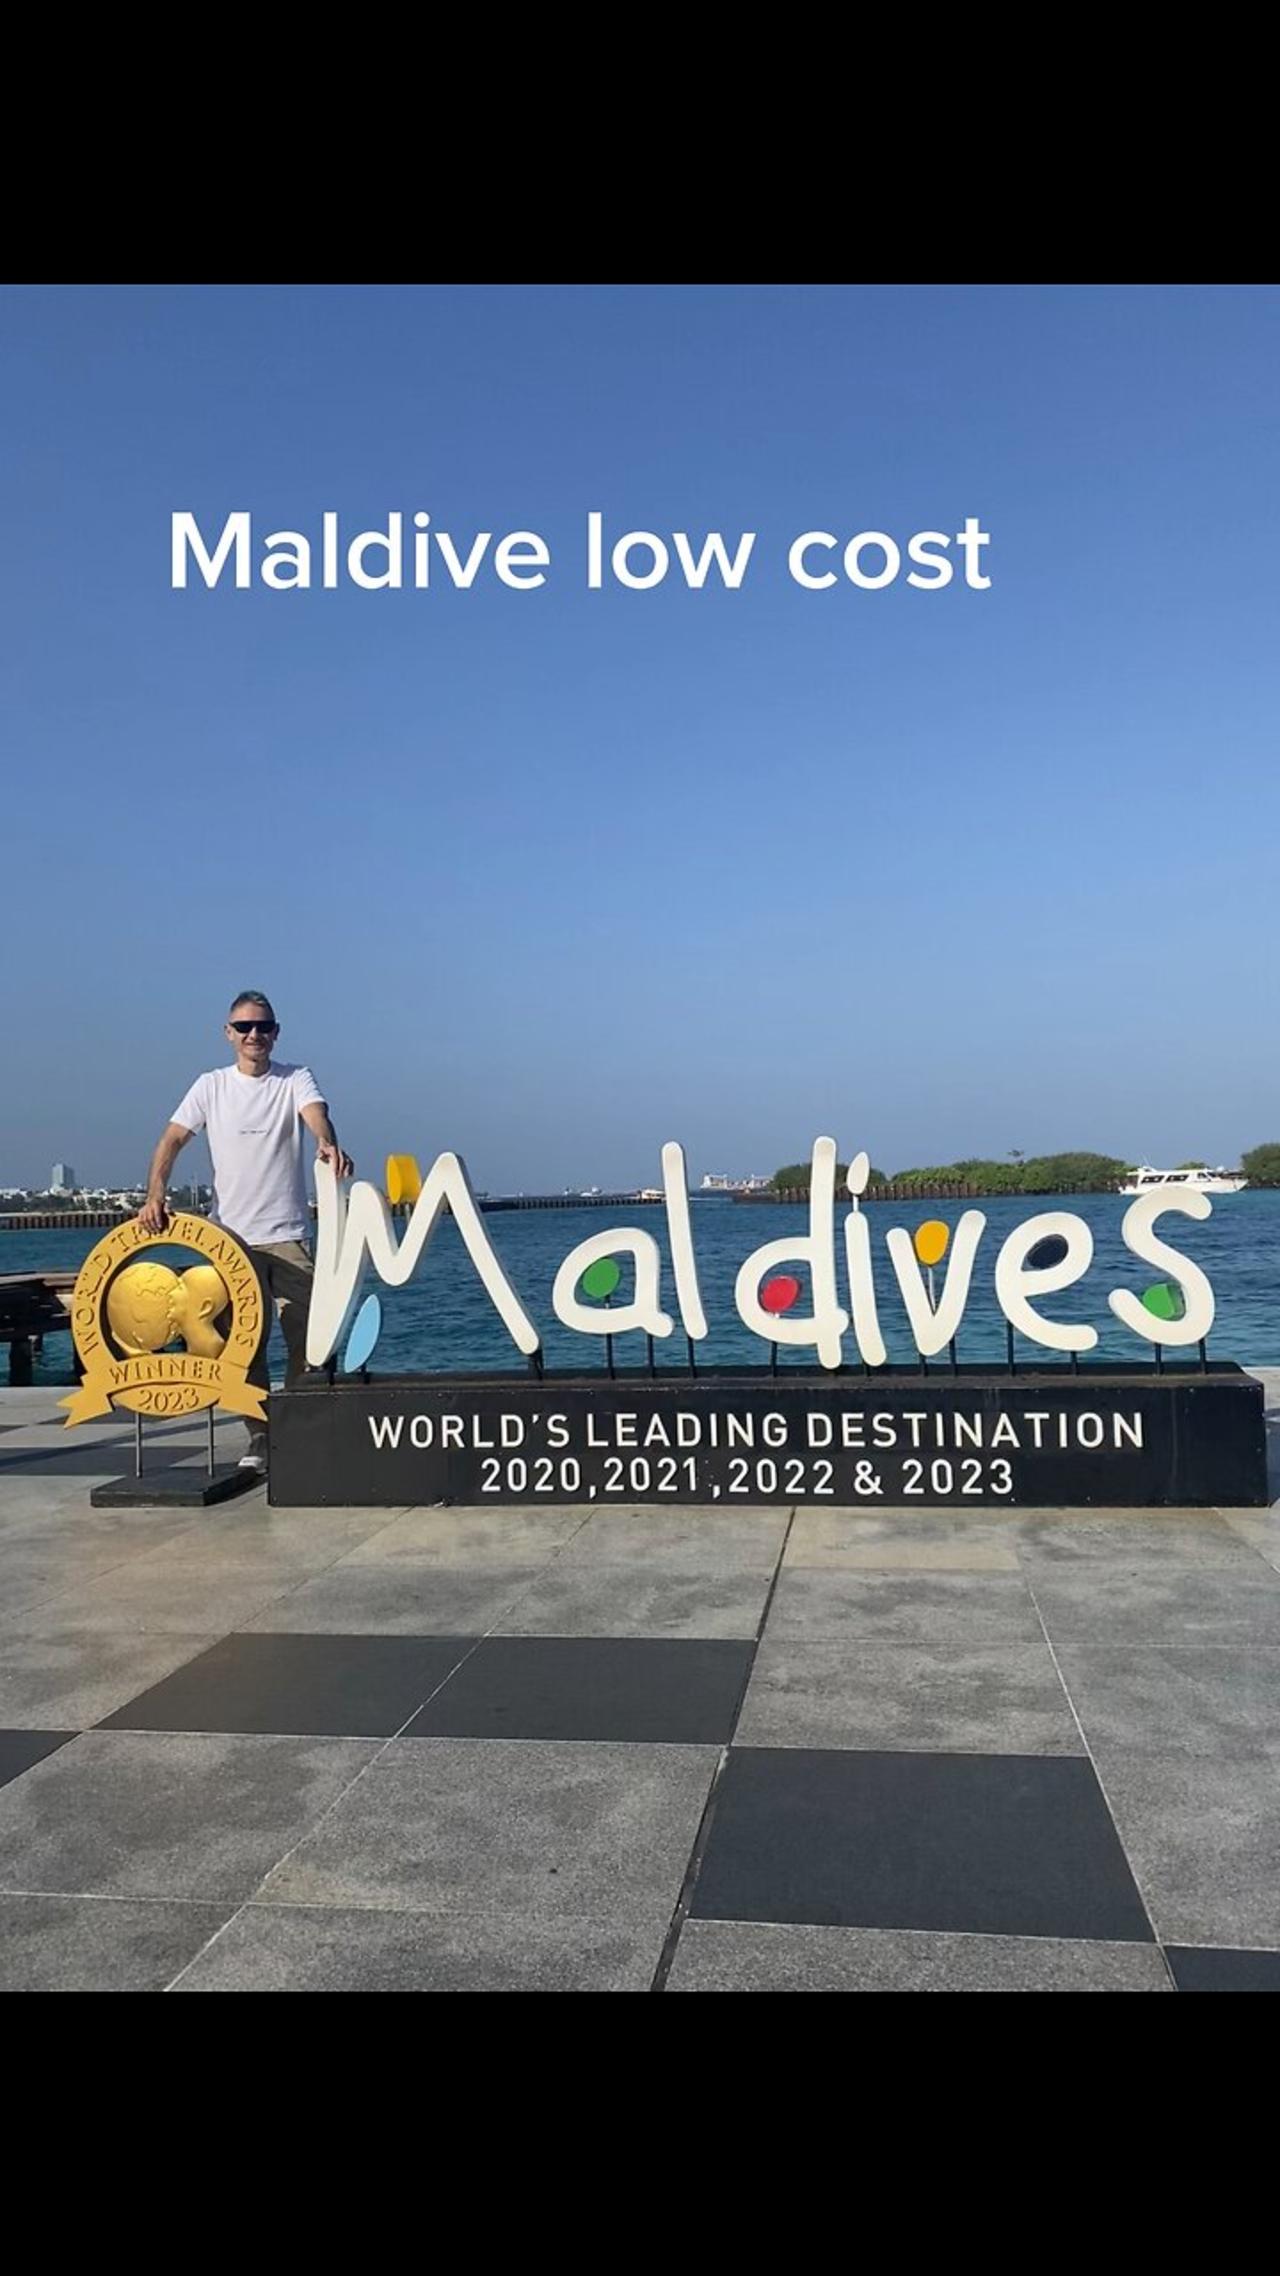 Maldives low cost